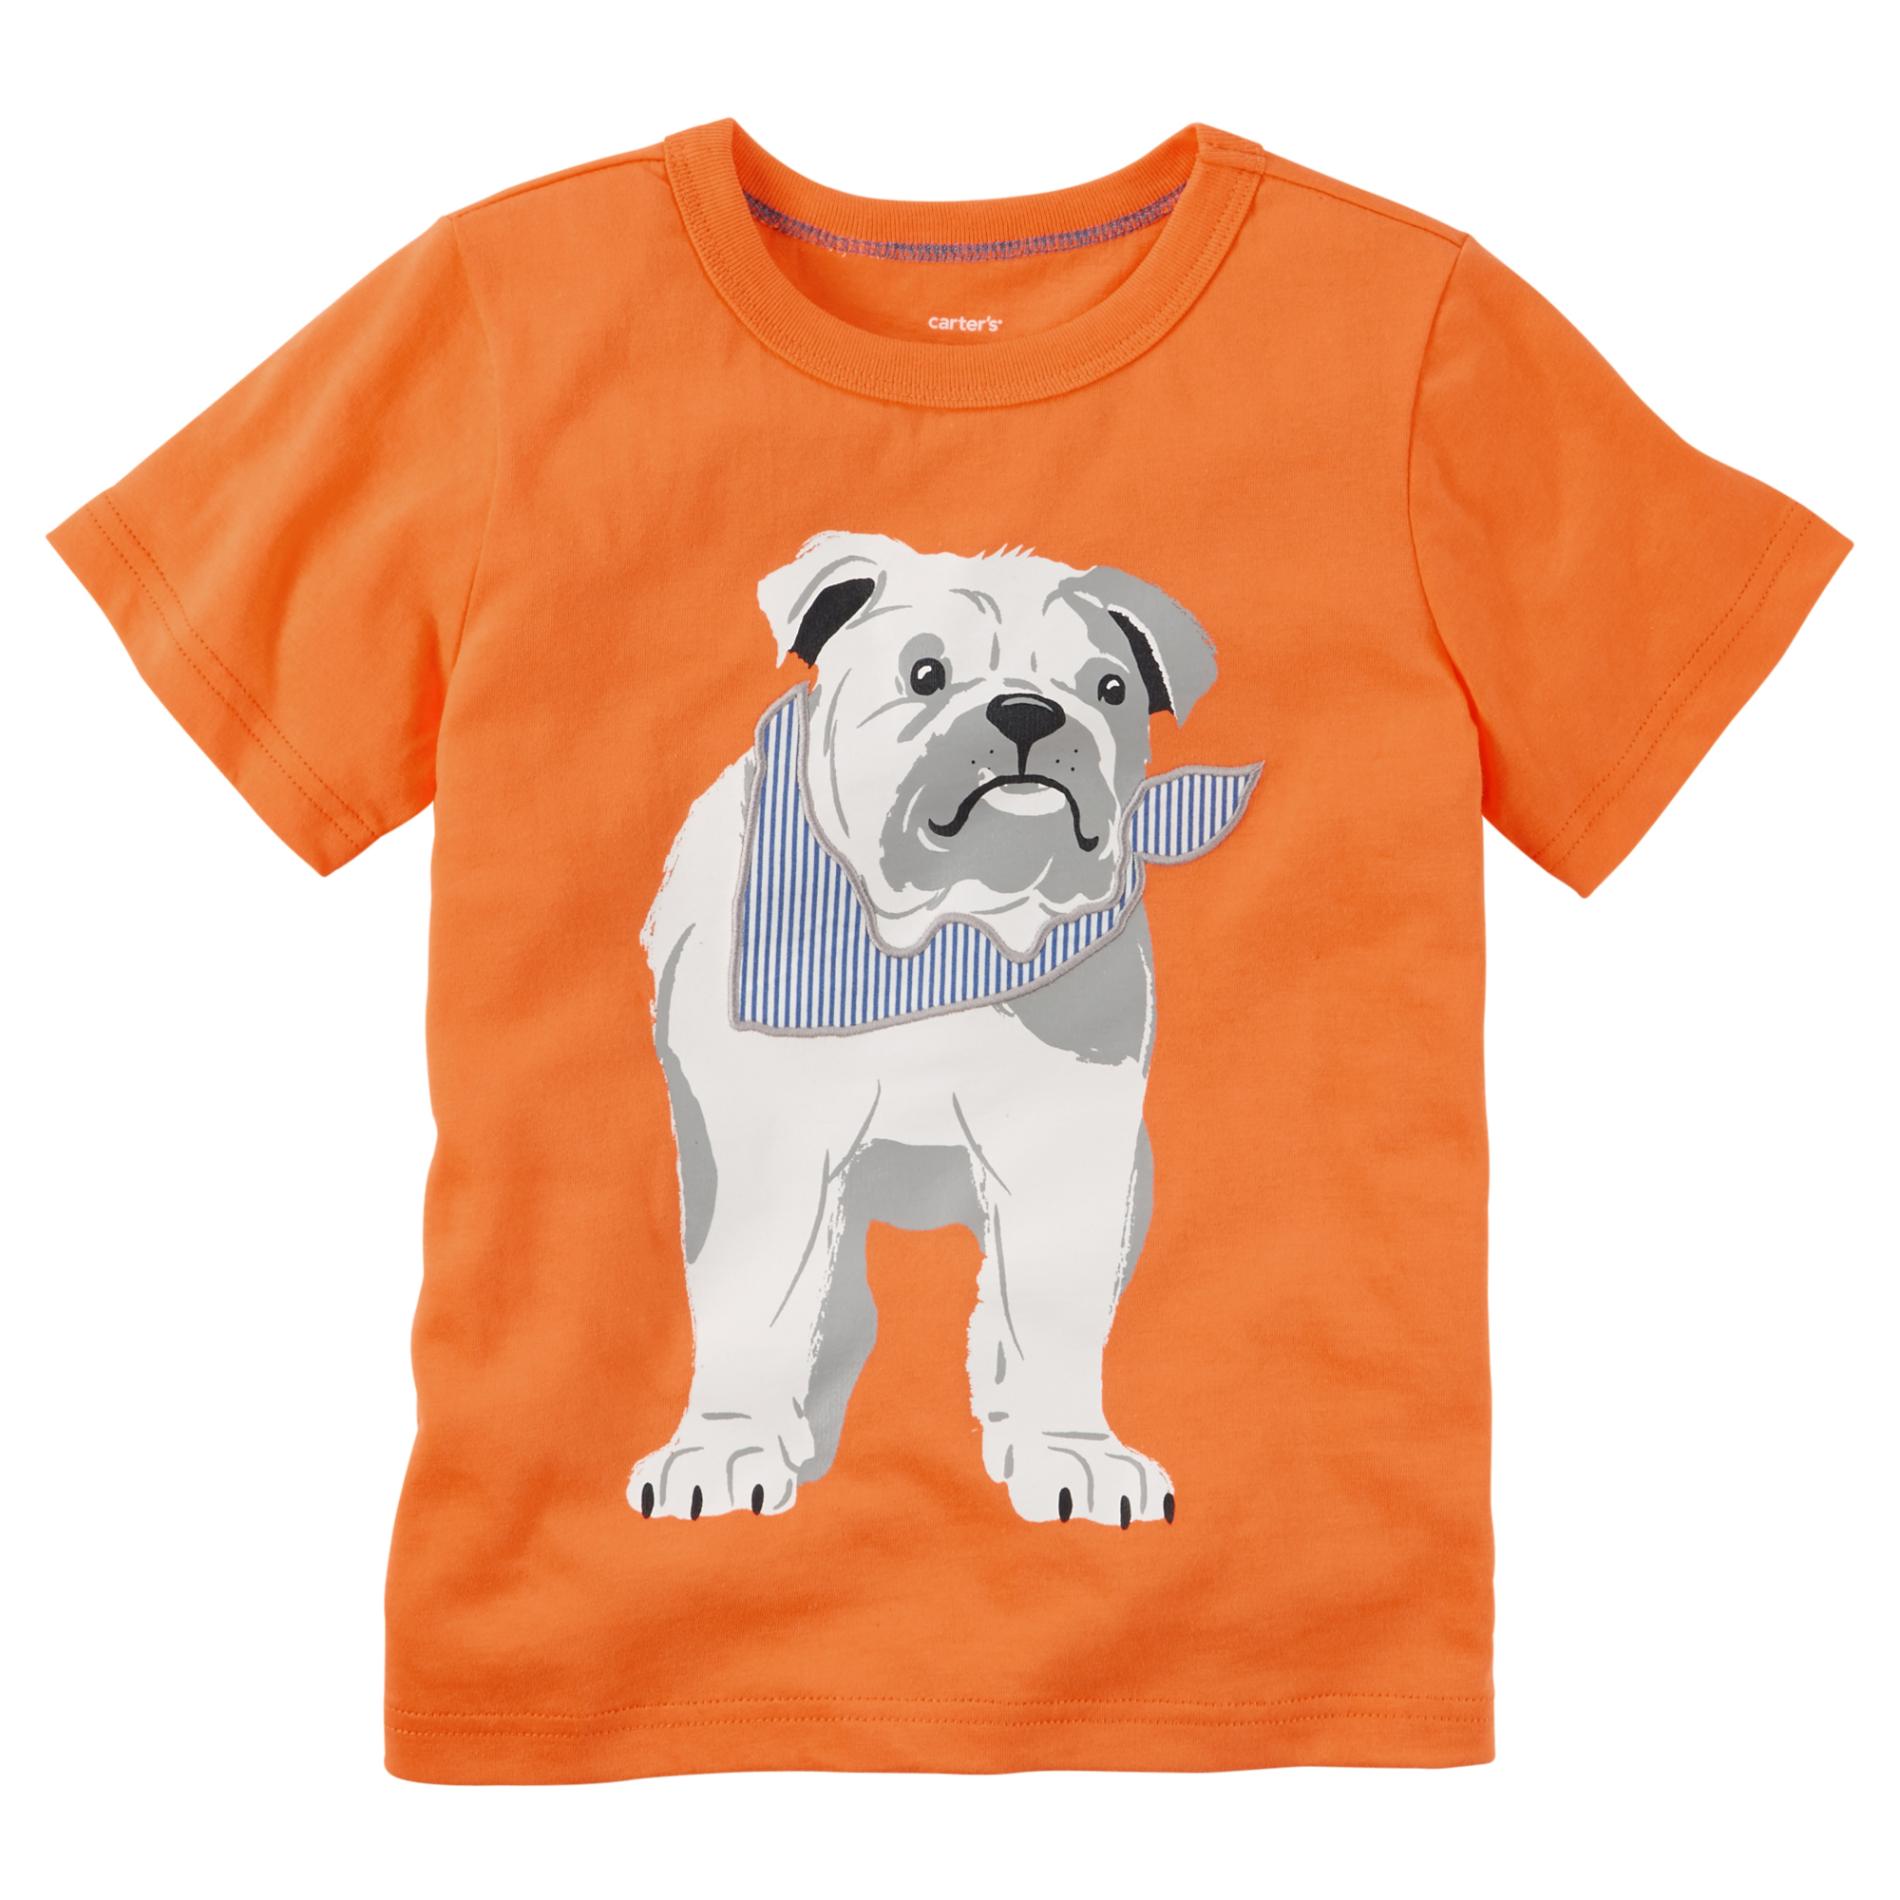 Boy's Graphic T-Shirt - Bulldog